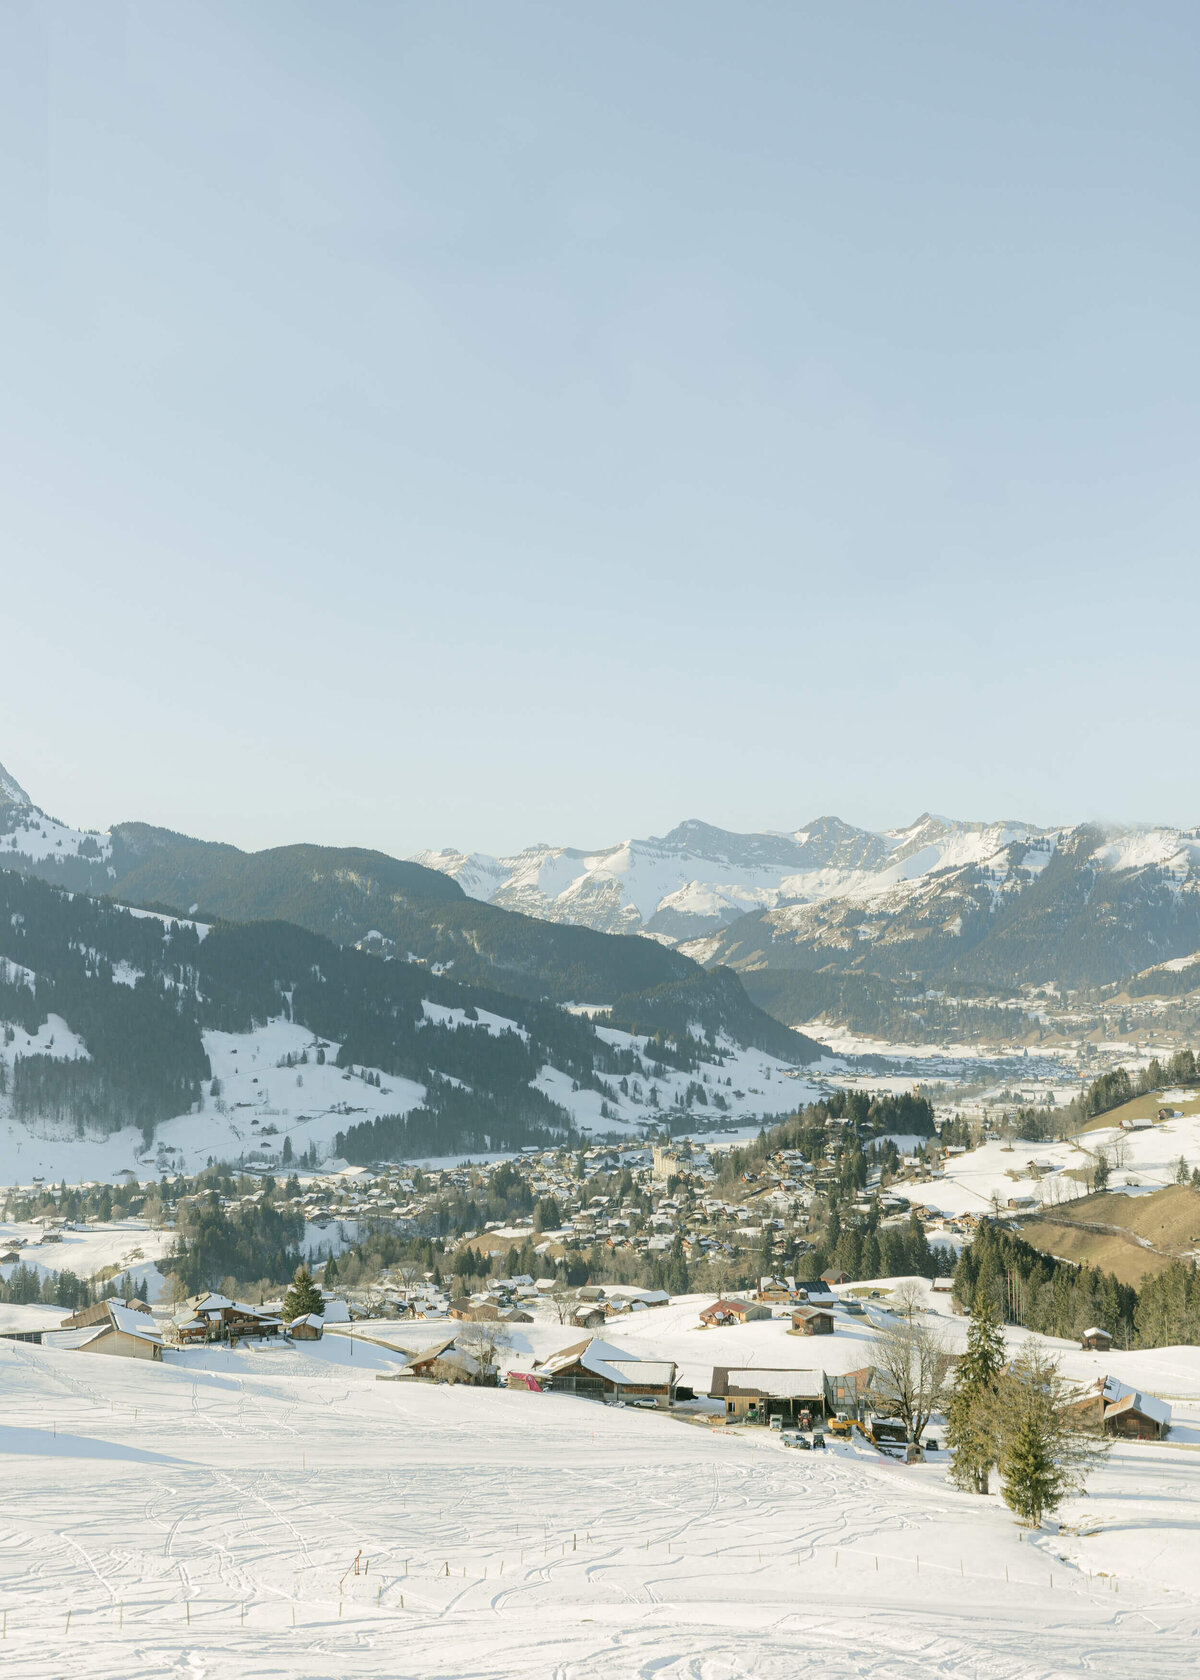 chloe-winstanley-events-gstaad-ski-slope-mountain-village